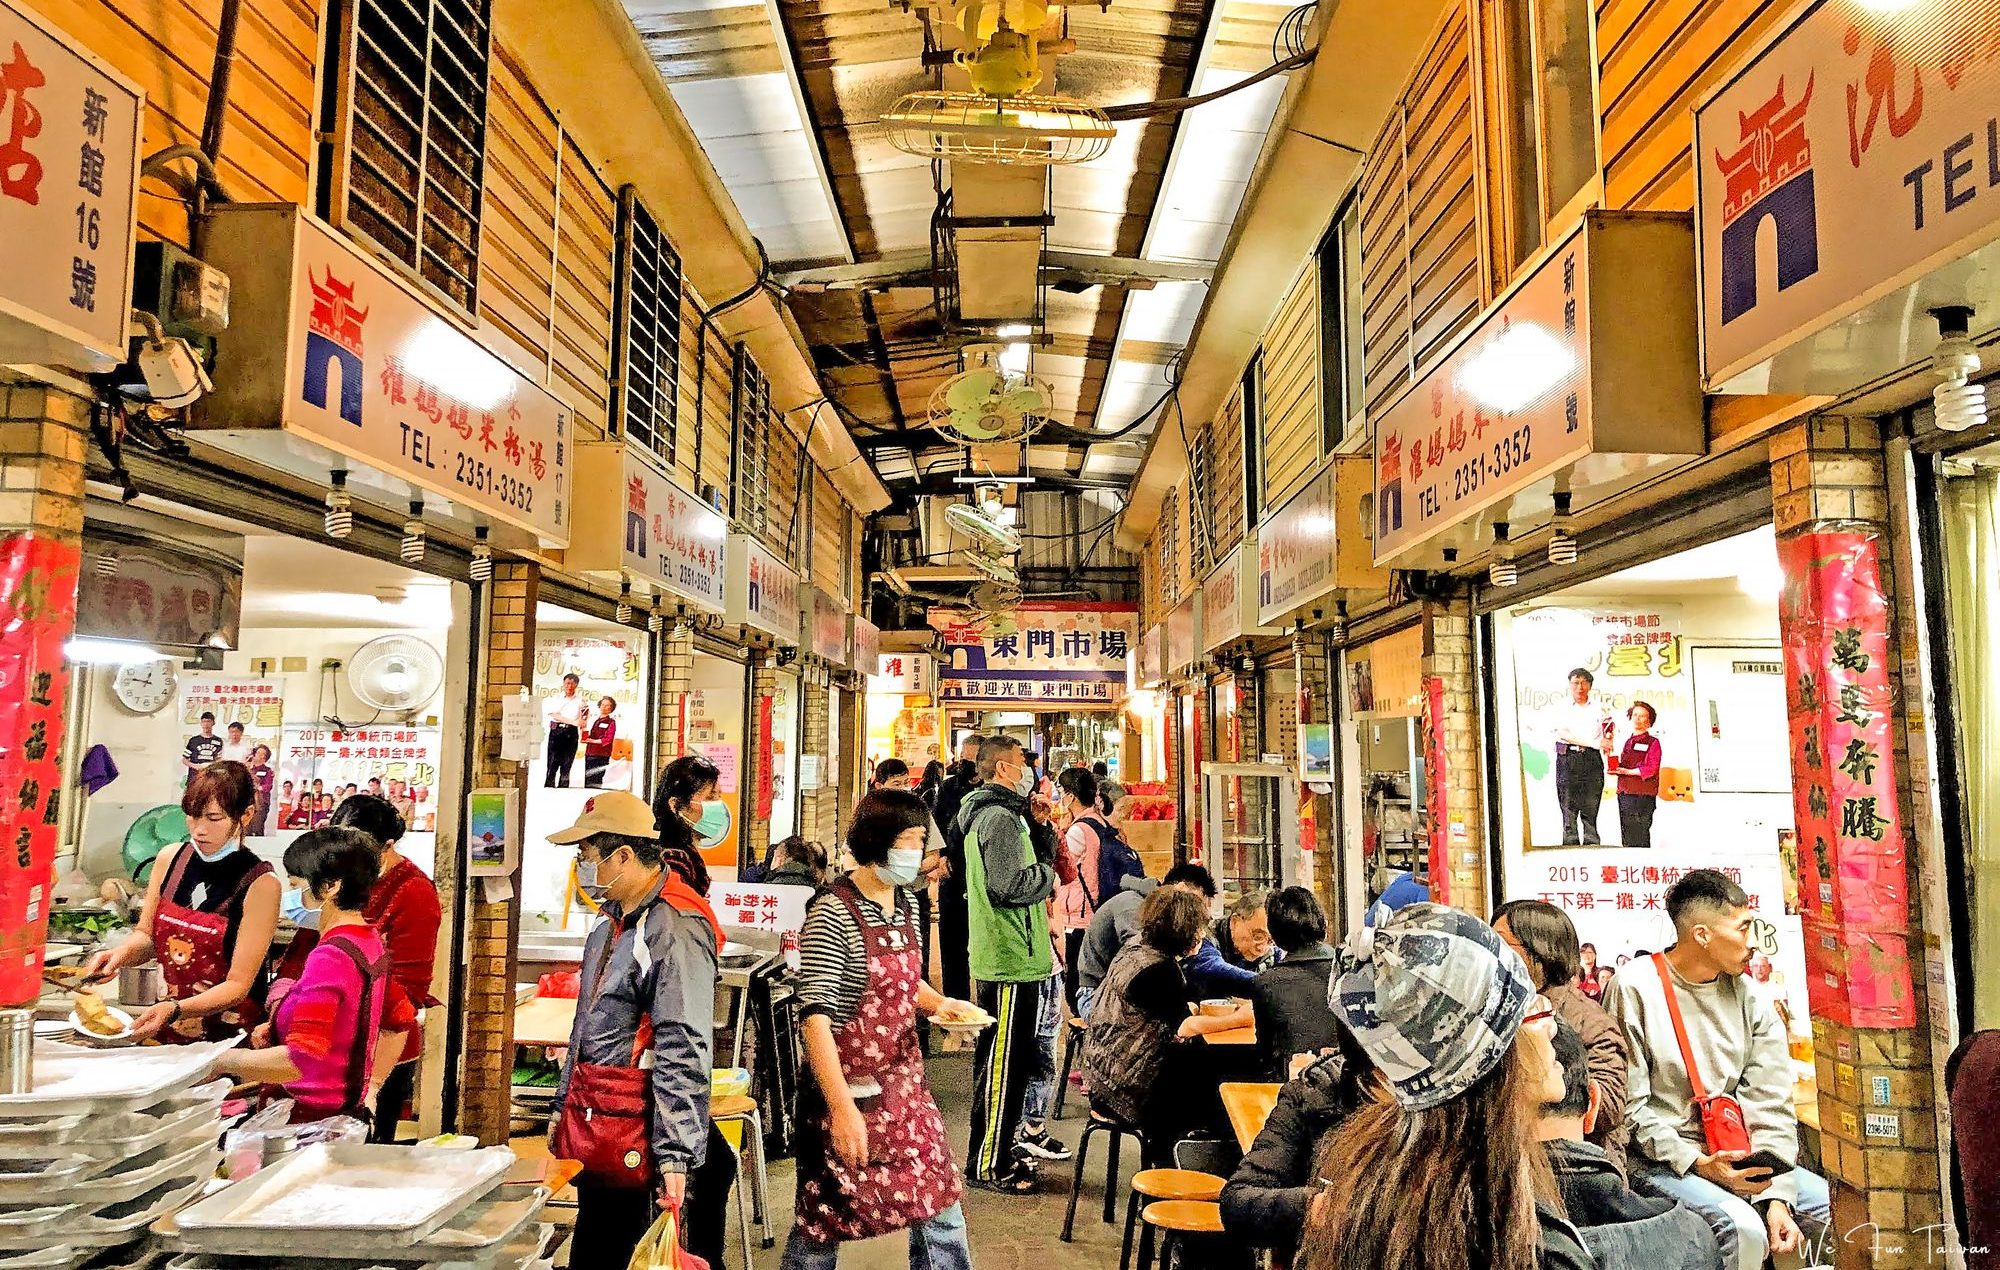 Dongmen Market – Discover 8 Hidden Foods in the Traditional Market